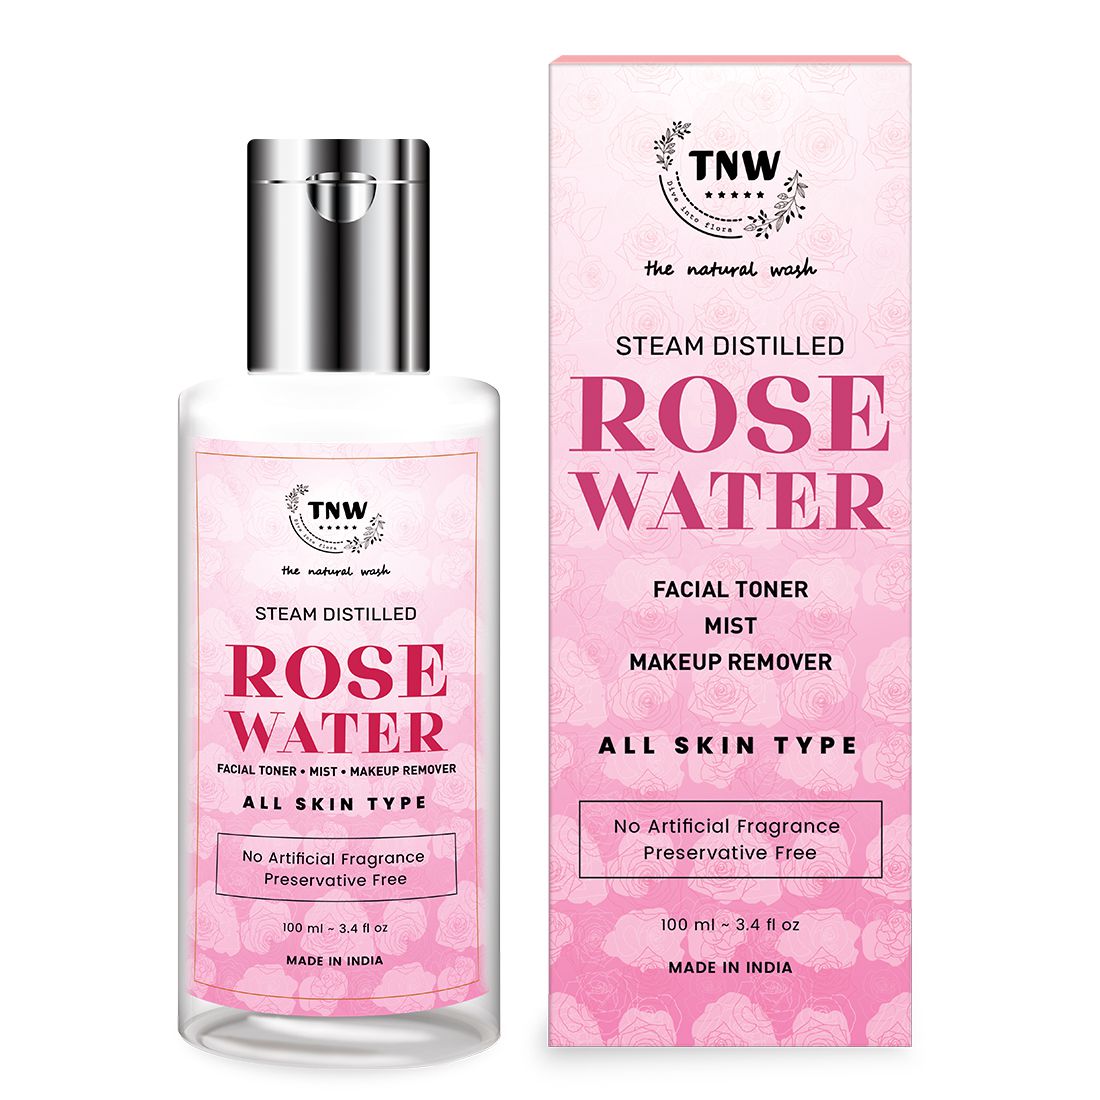 TNW The Natural Wash Skin Moisturising Rose Water/Toner/Makeup Remover 100ml